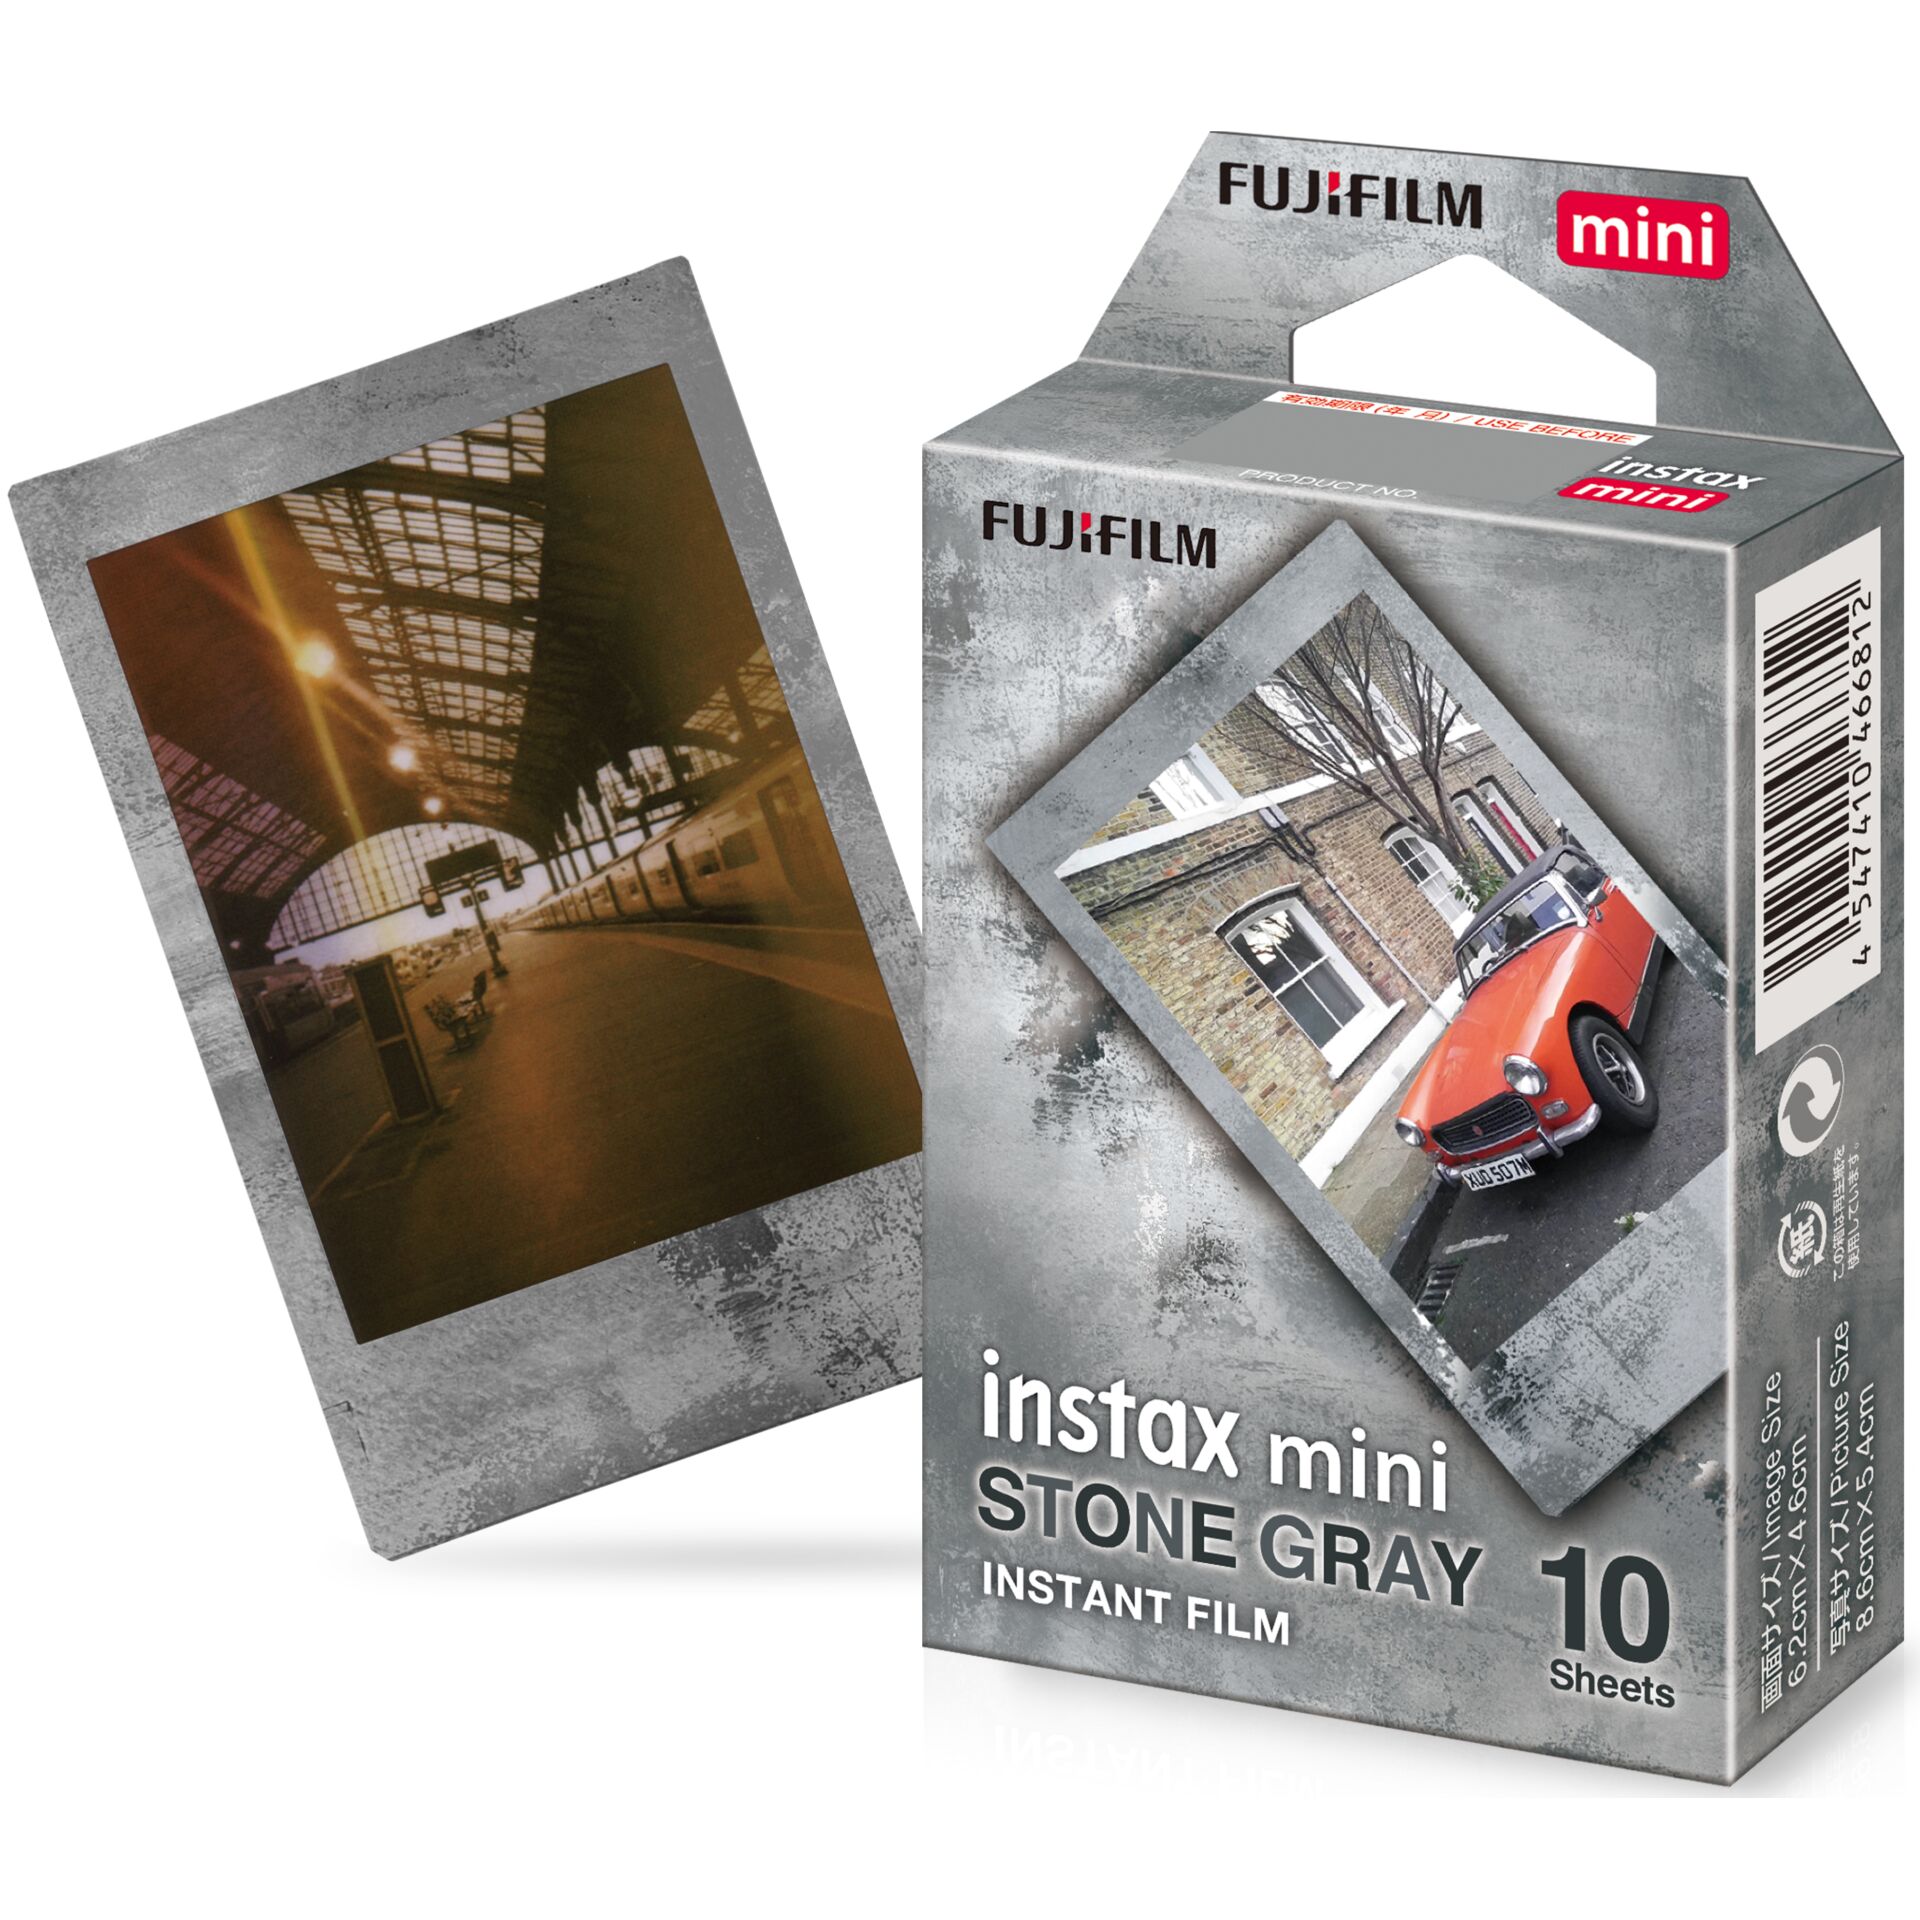 Fujifilm instax mini Film stone grey